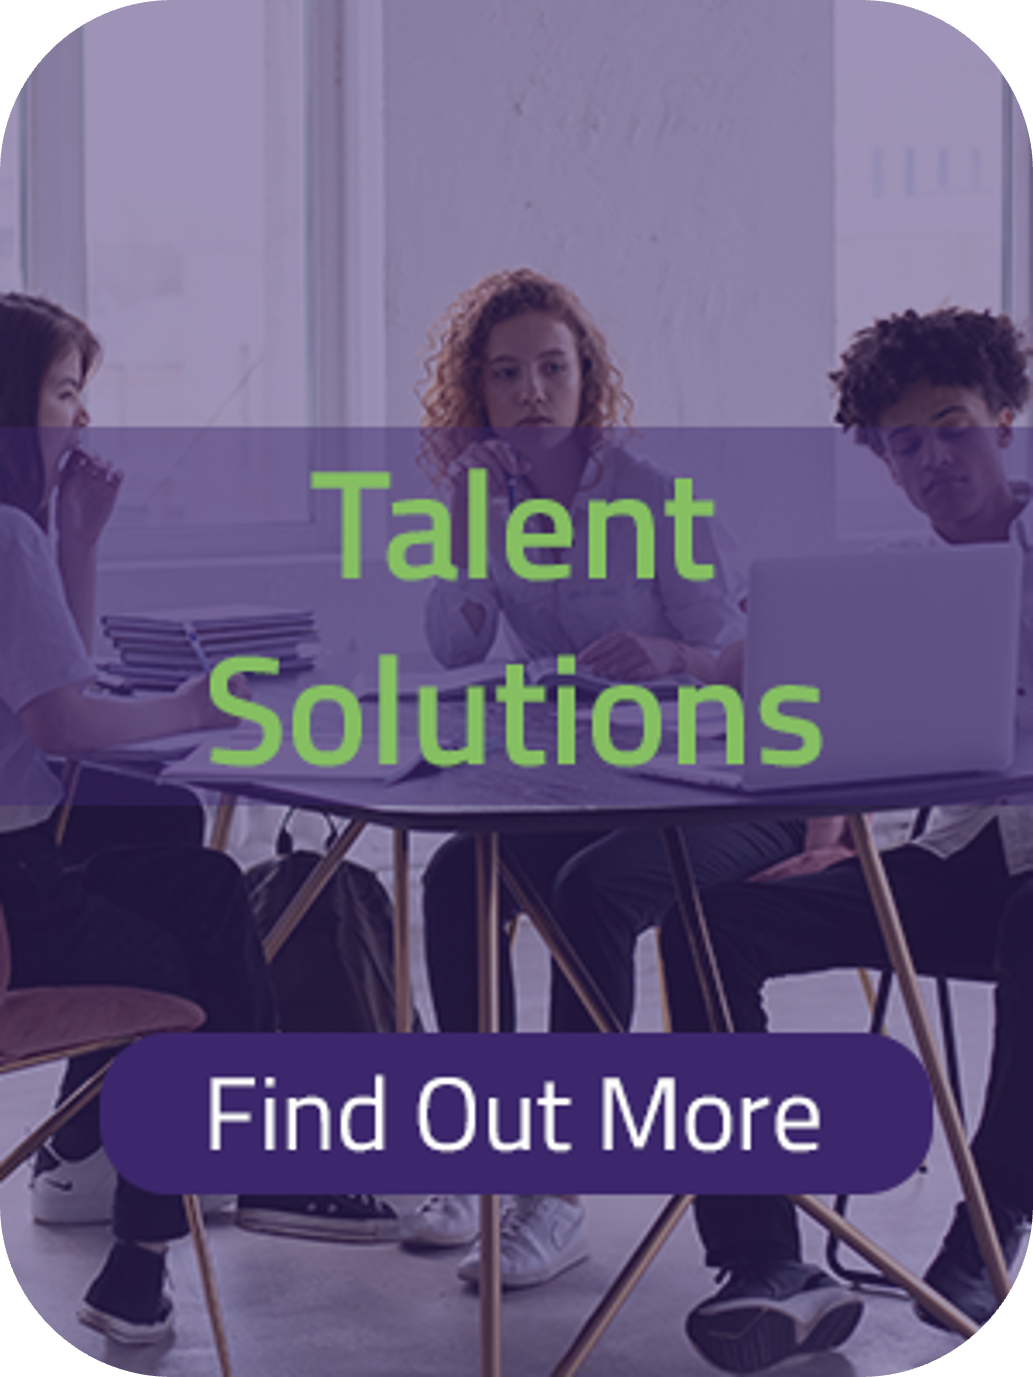 Talent Solutions Tile